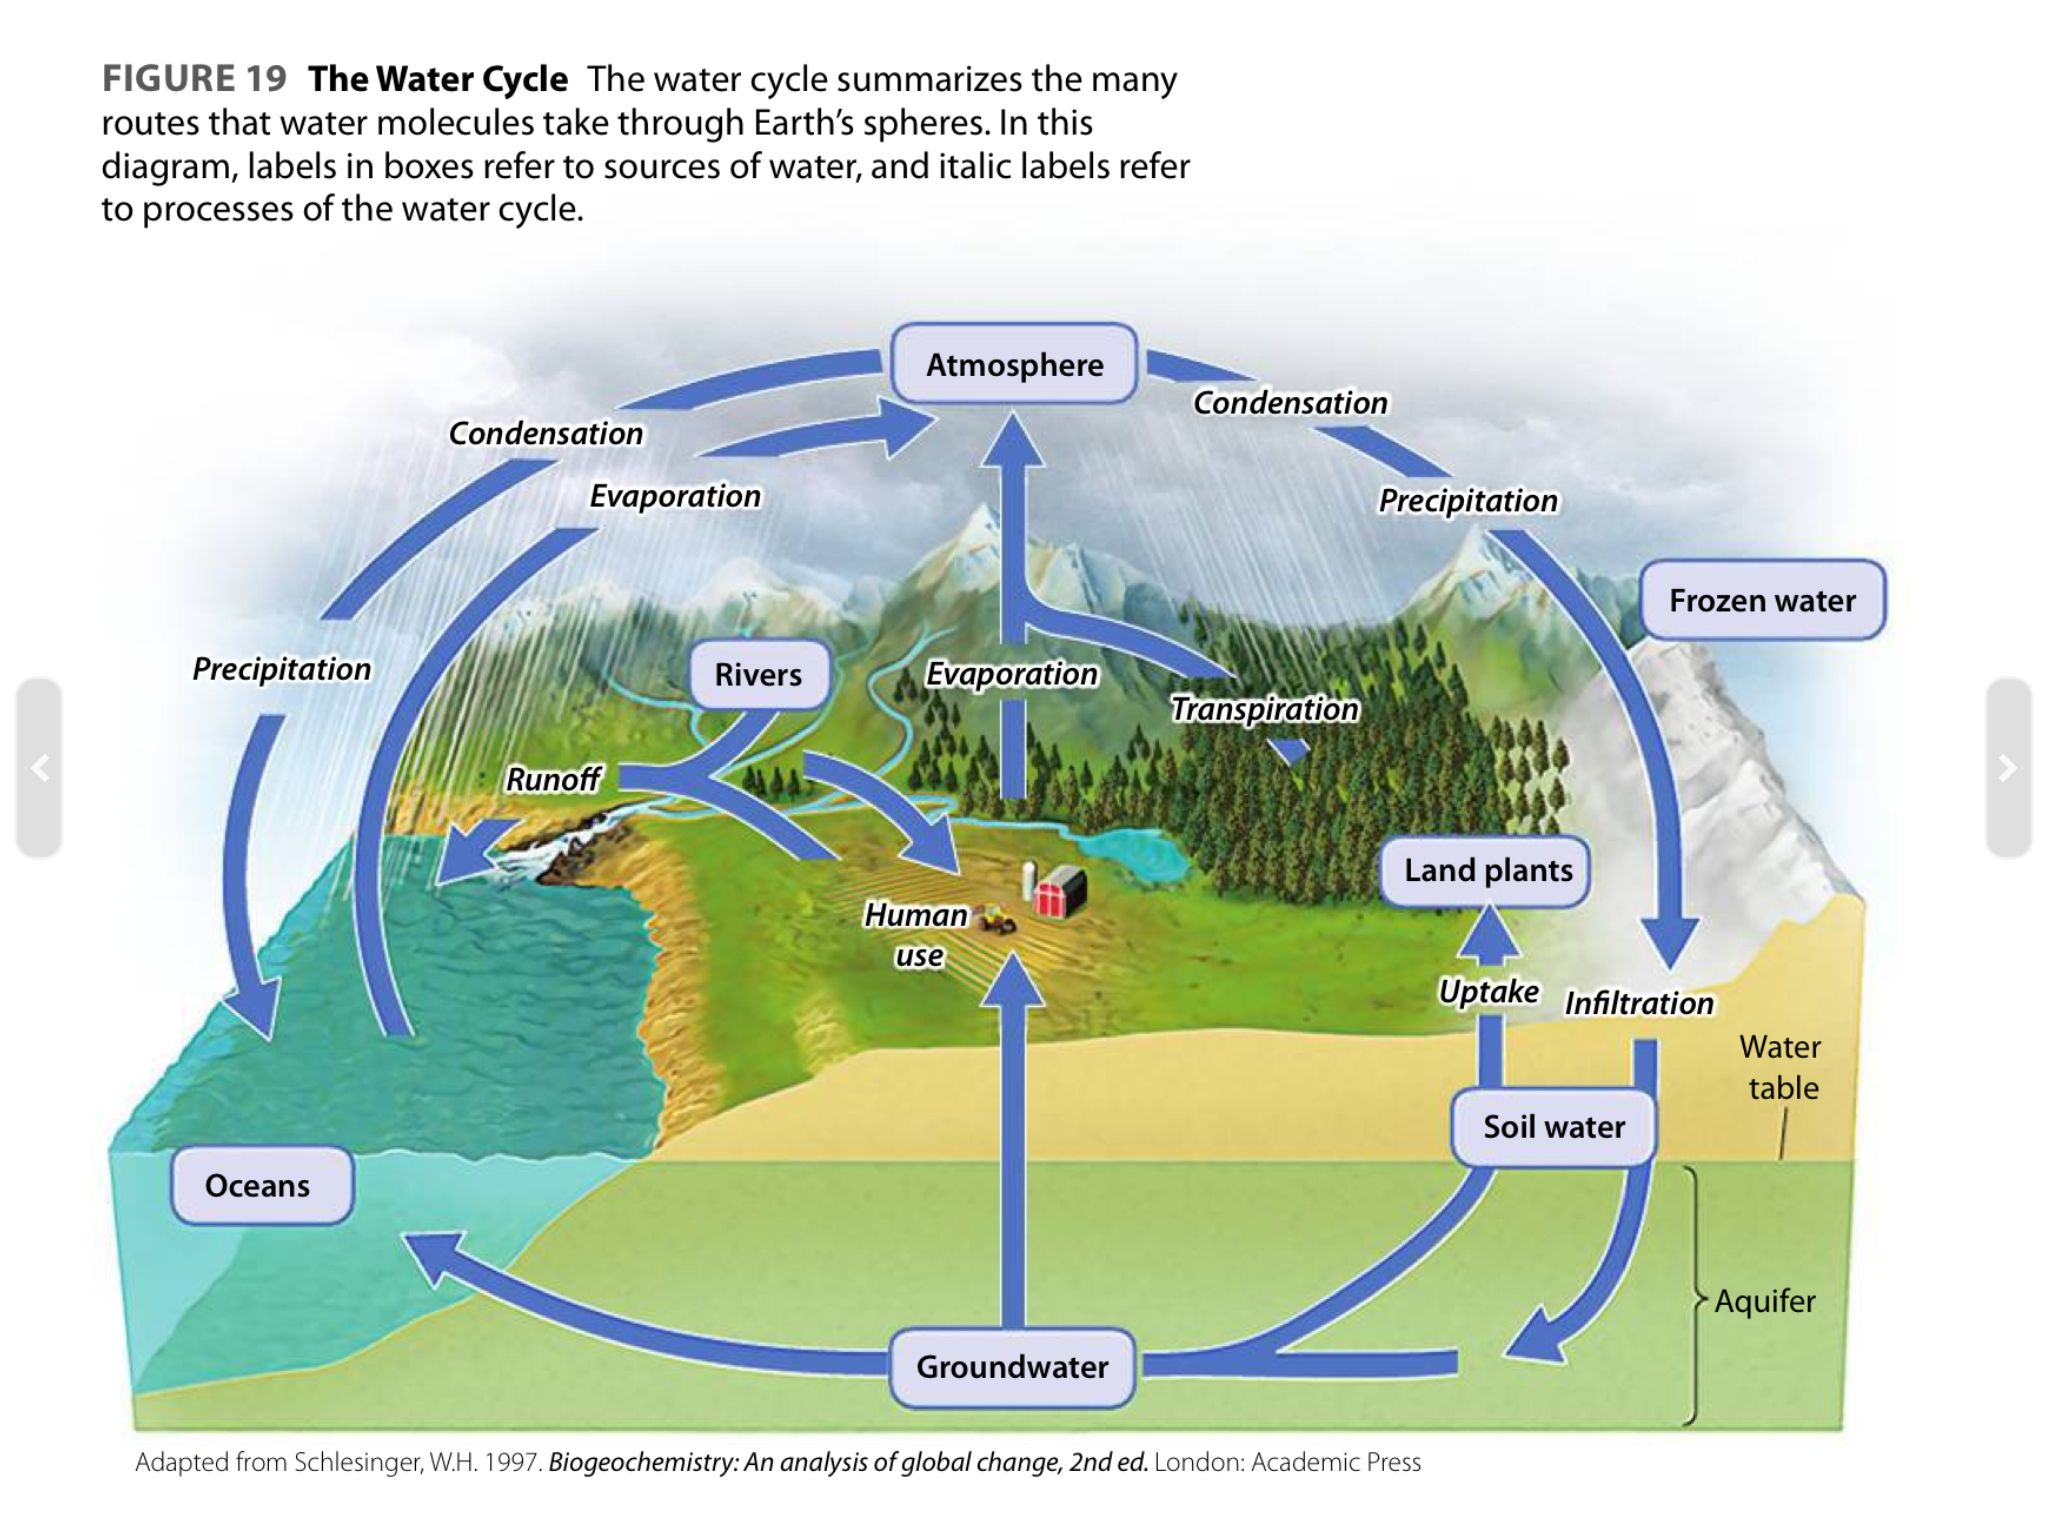 Water Cycle diagram